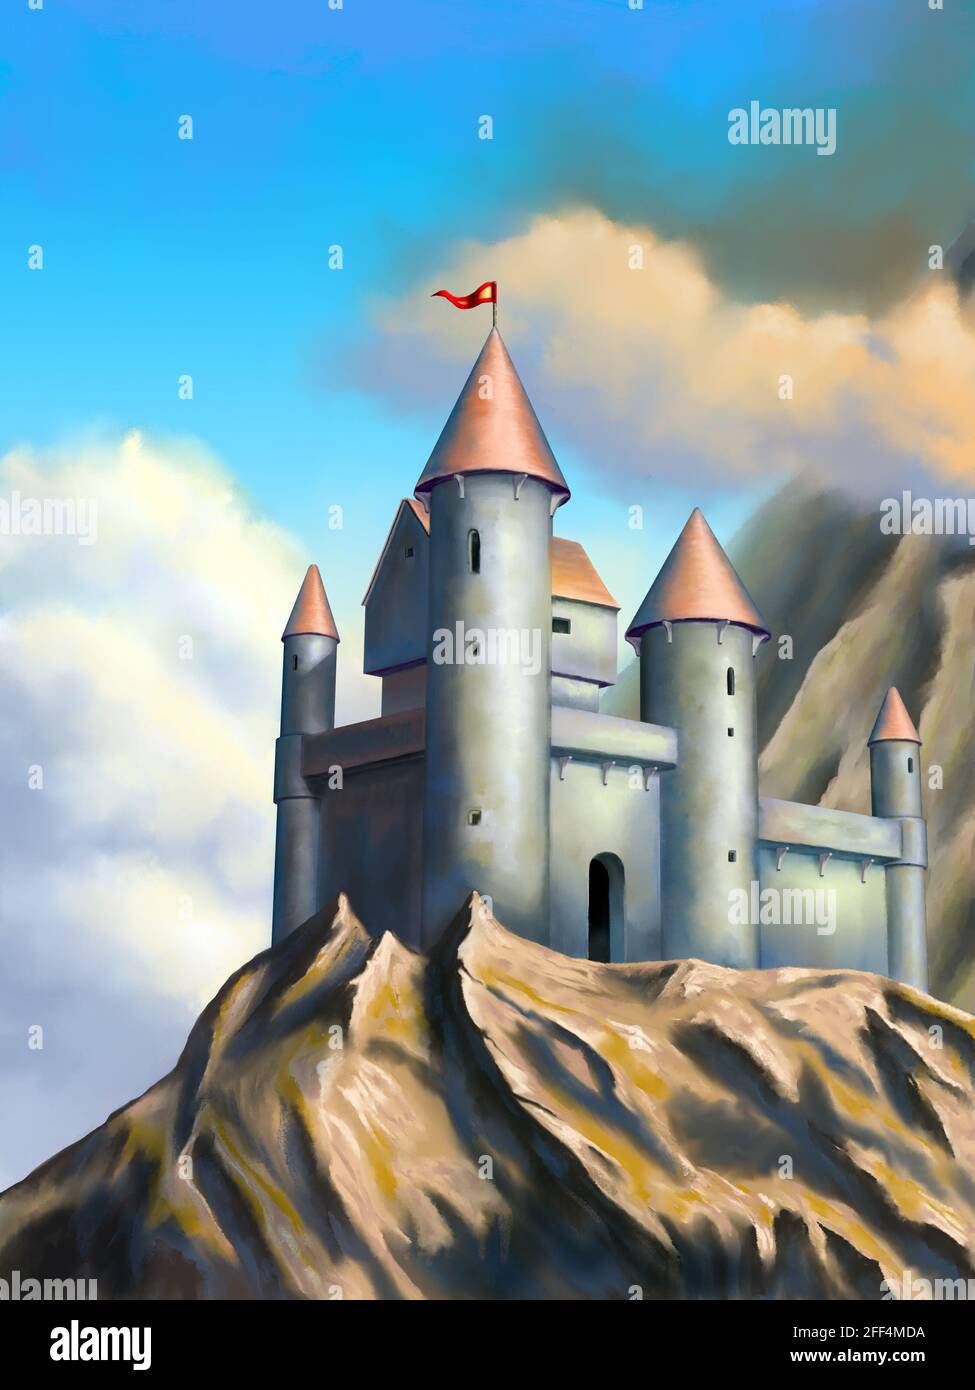 Medieval castle in an imaginary landscape. Original digital illustration. Stock Photo